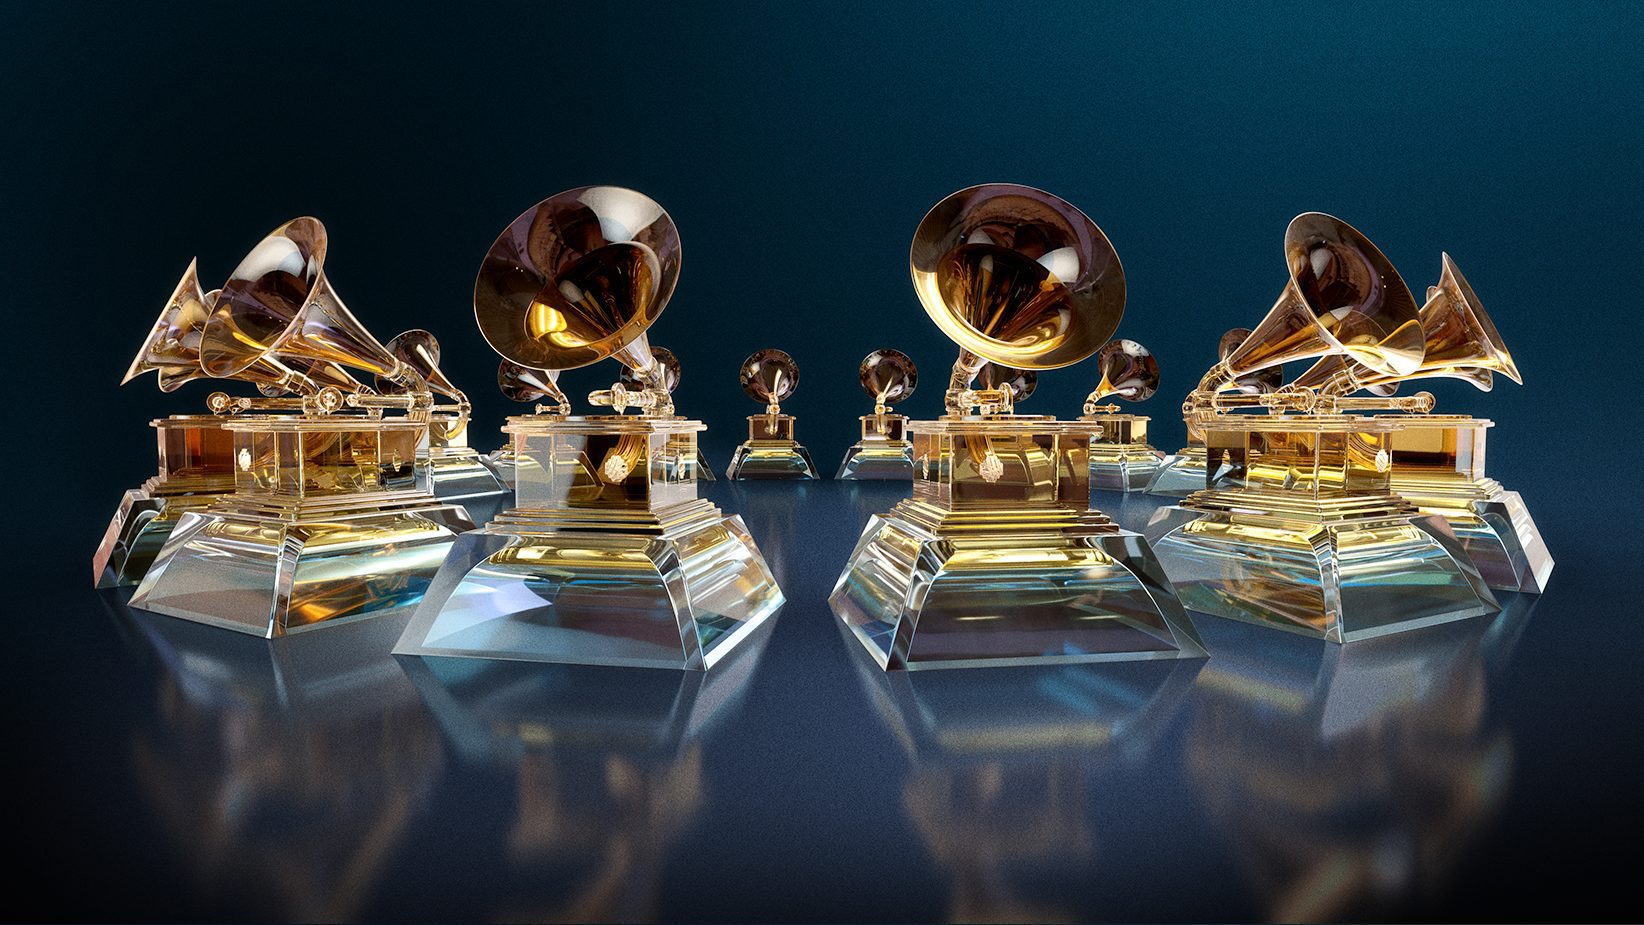 Grammy Hall of Fame